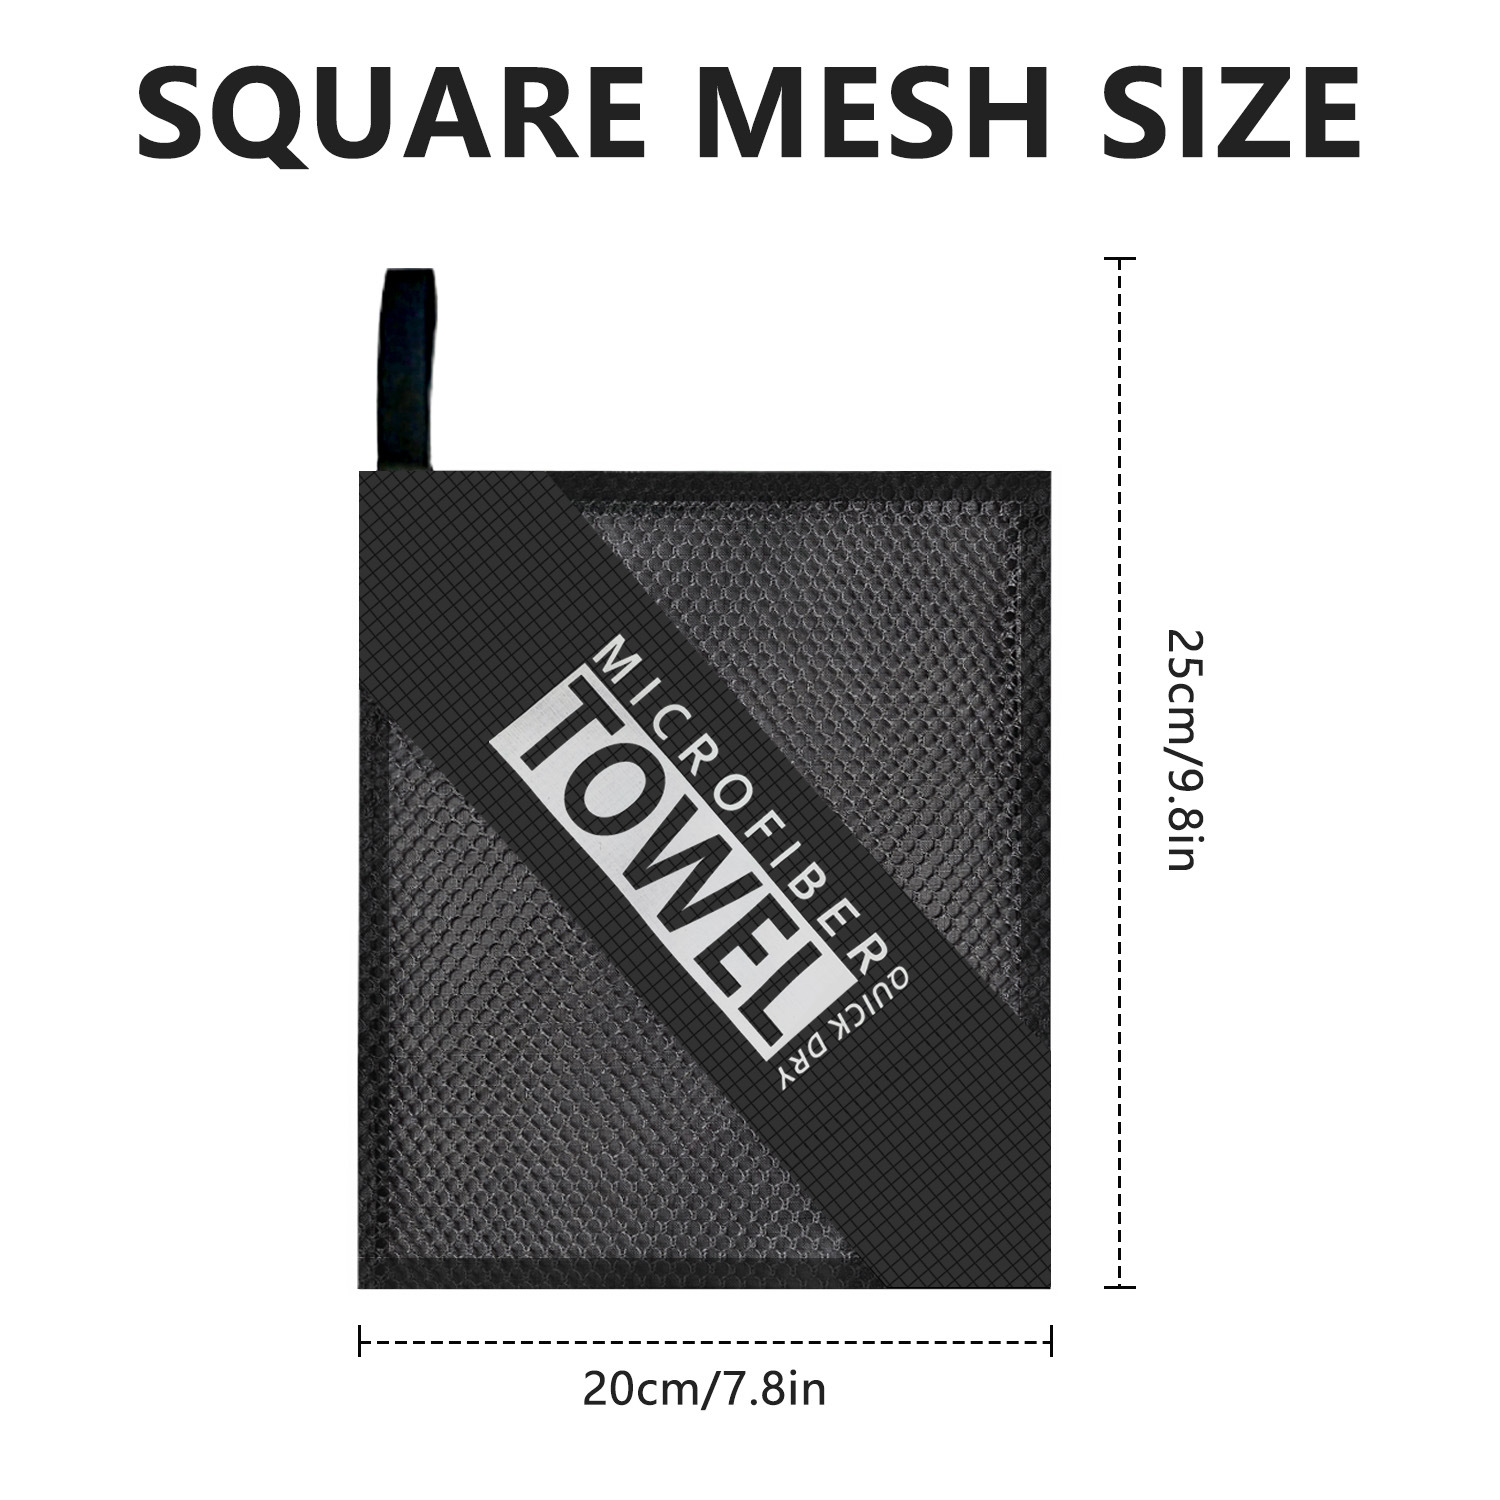 Square mesh bag